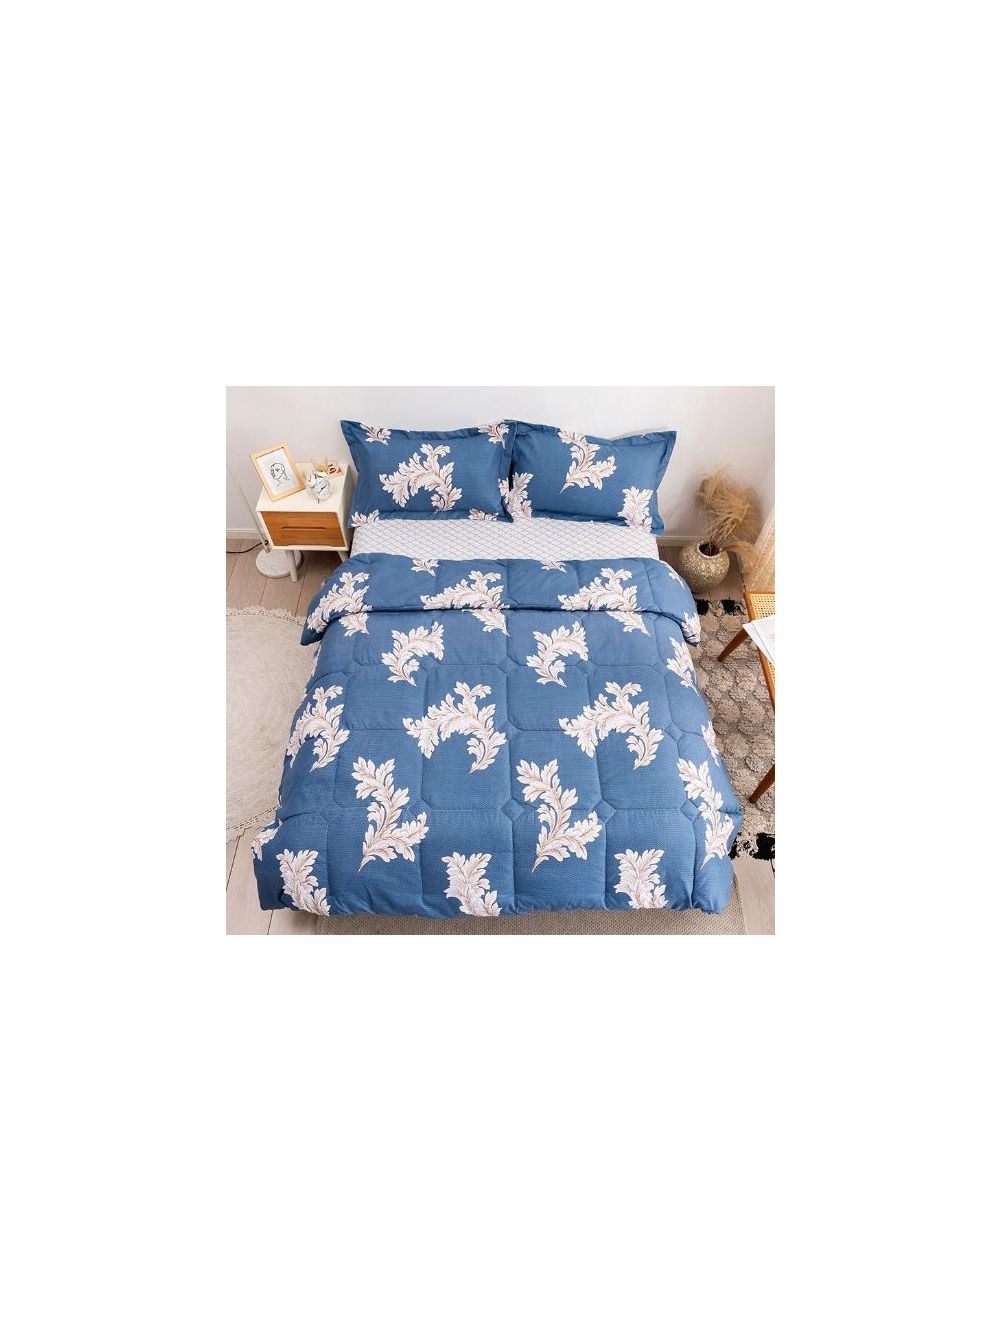 Rishahome 4 Piece Queen Size Comforter Set Microfiber Blue 210x230cm-PBLCS0004